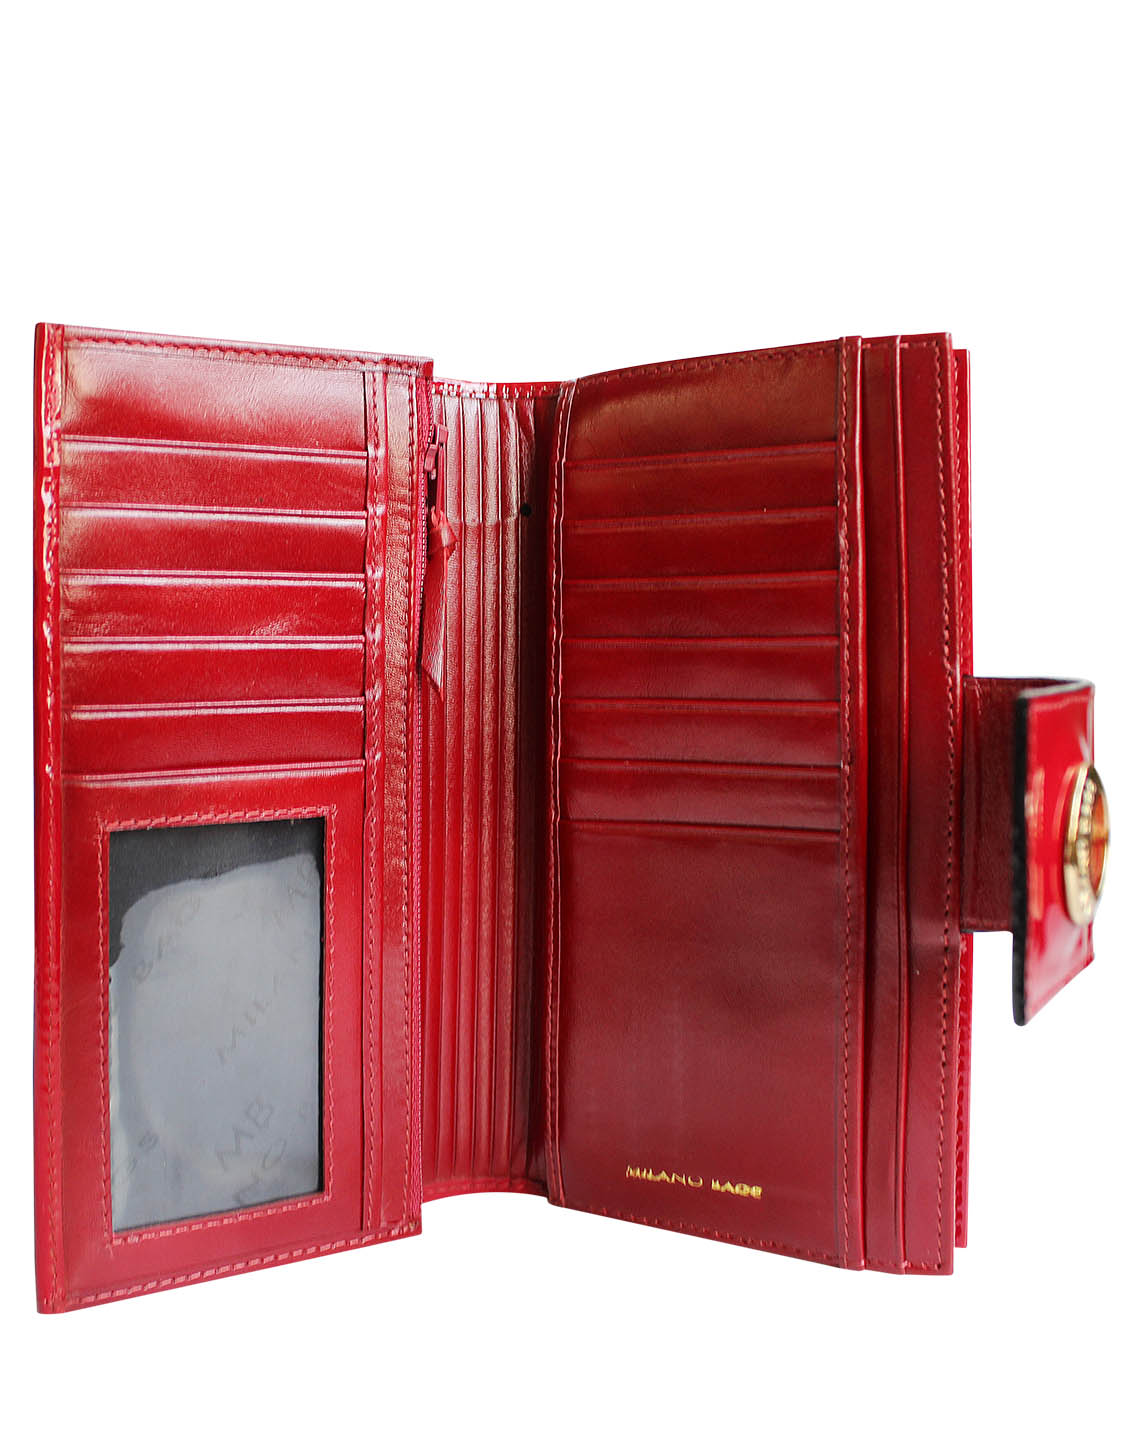 Billetera de Mujer BM-504 Color Rojo